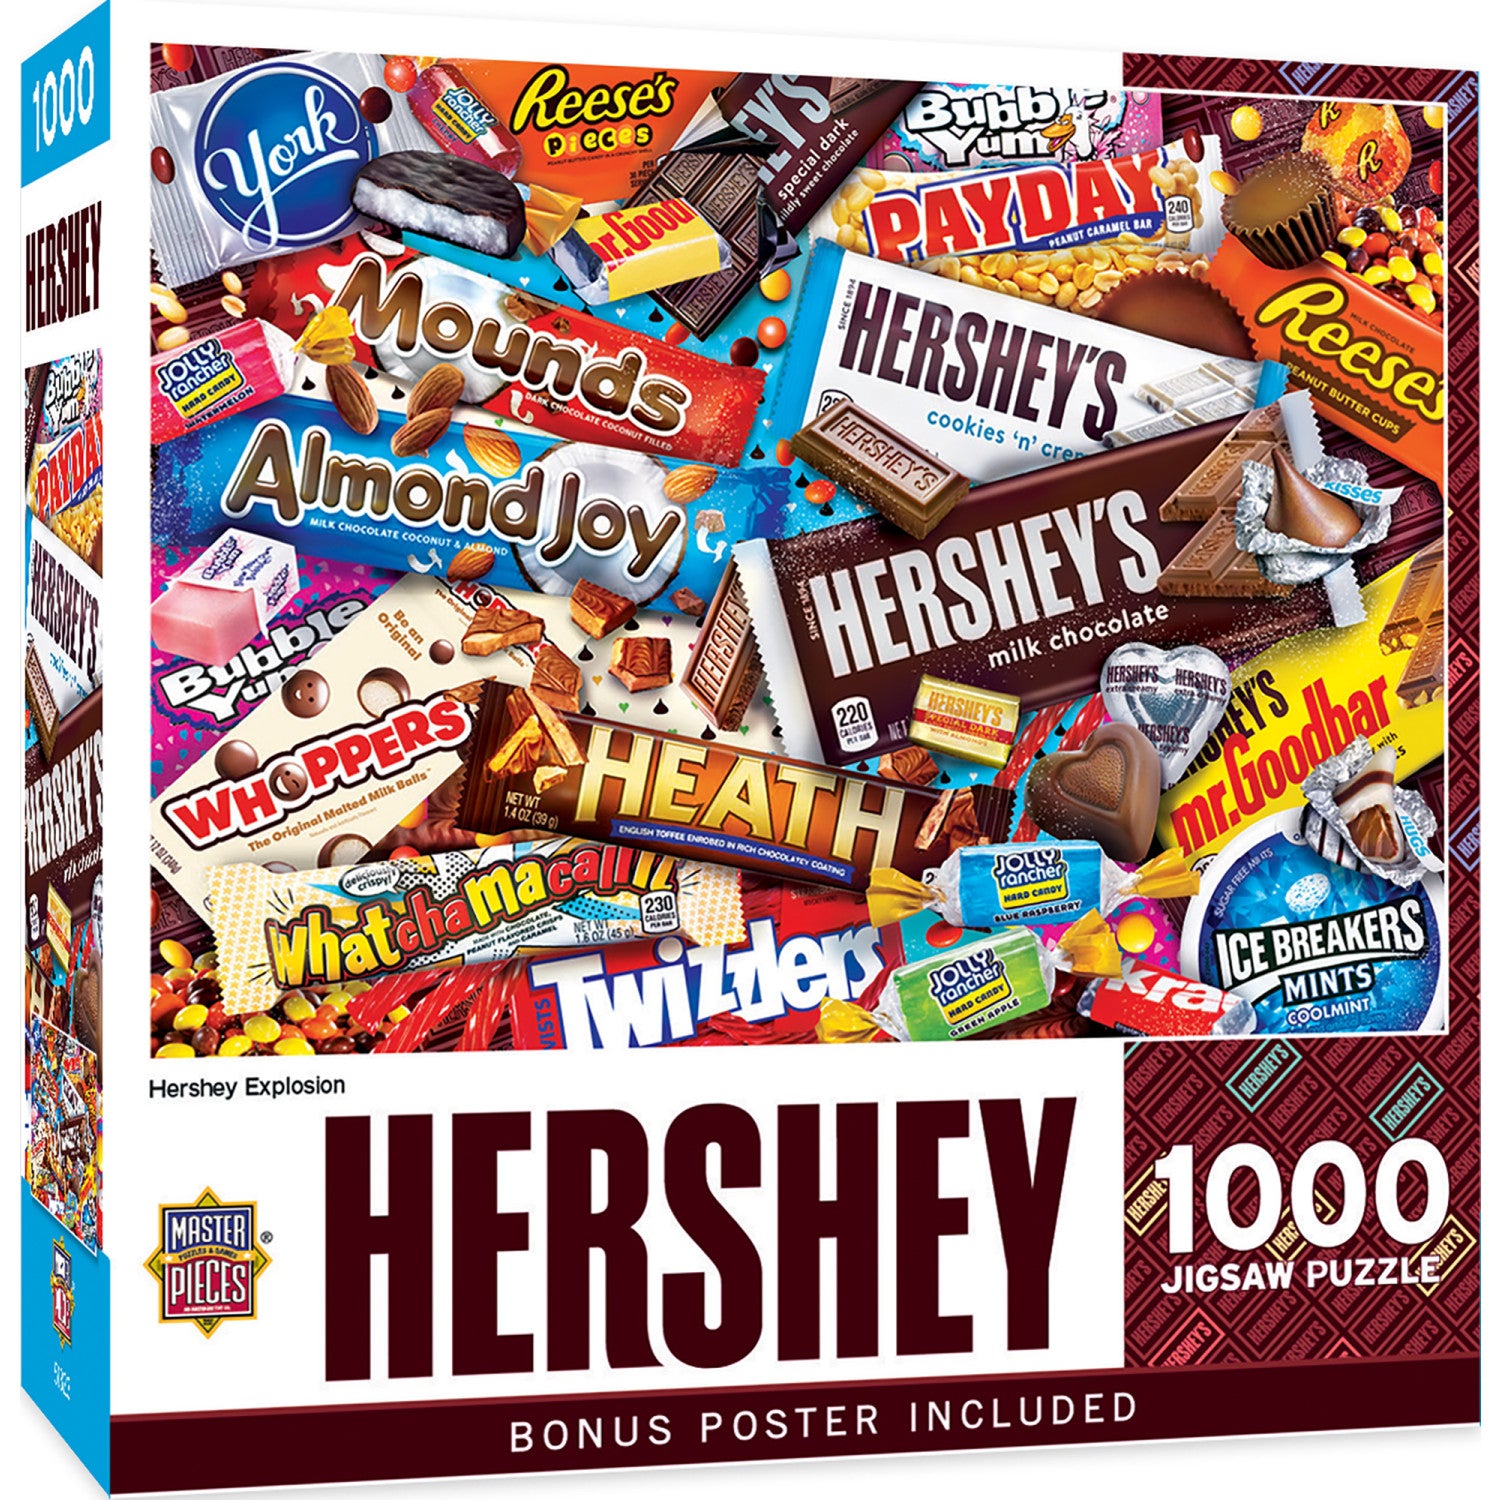 Hershey's Explosion - 1000 Piece Jigsaw Puzzle